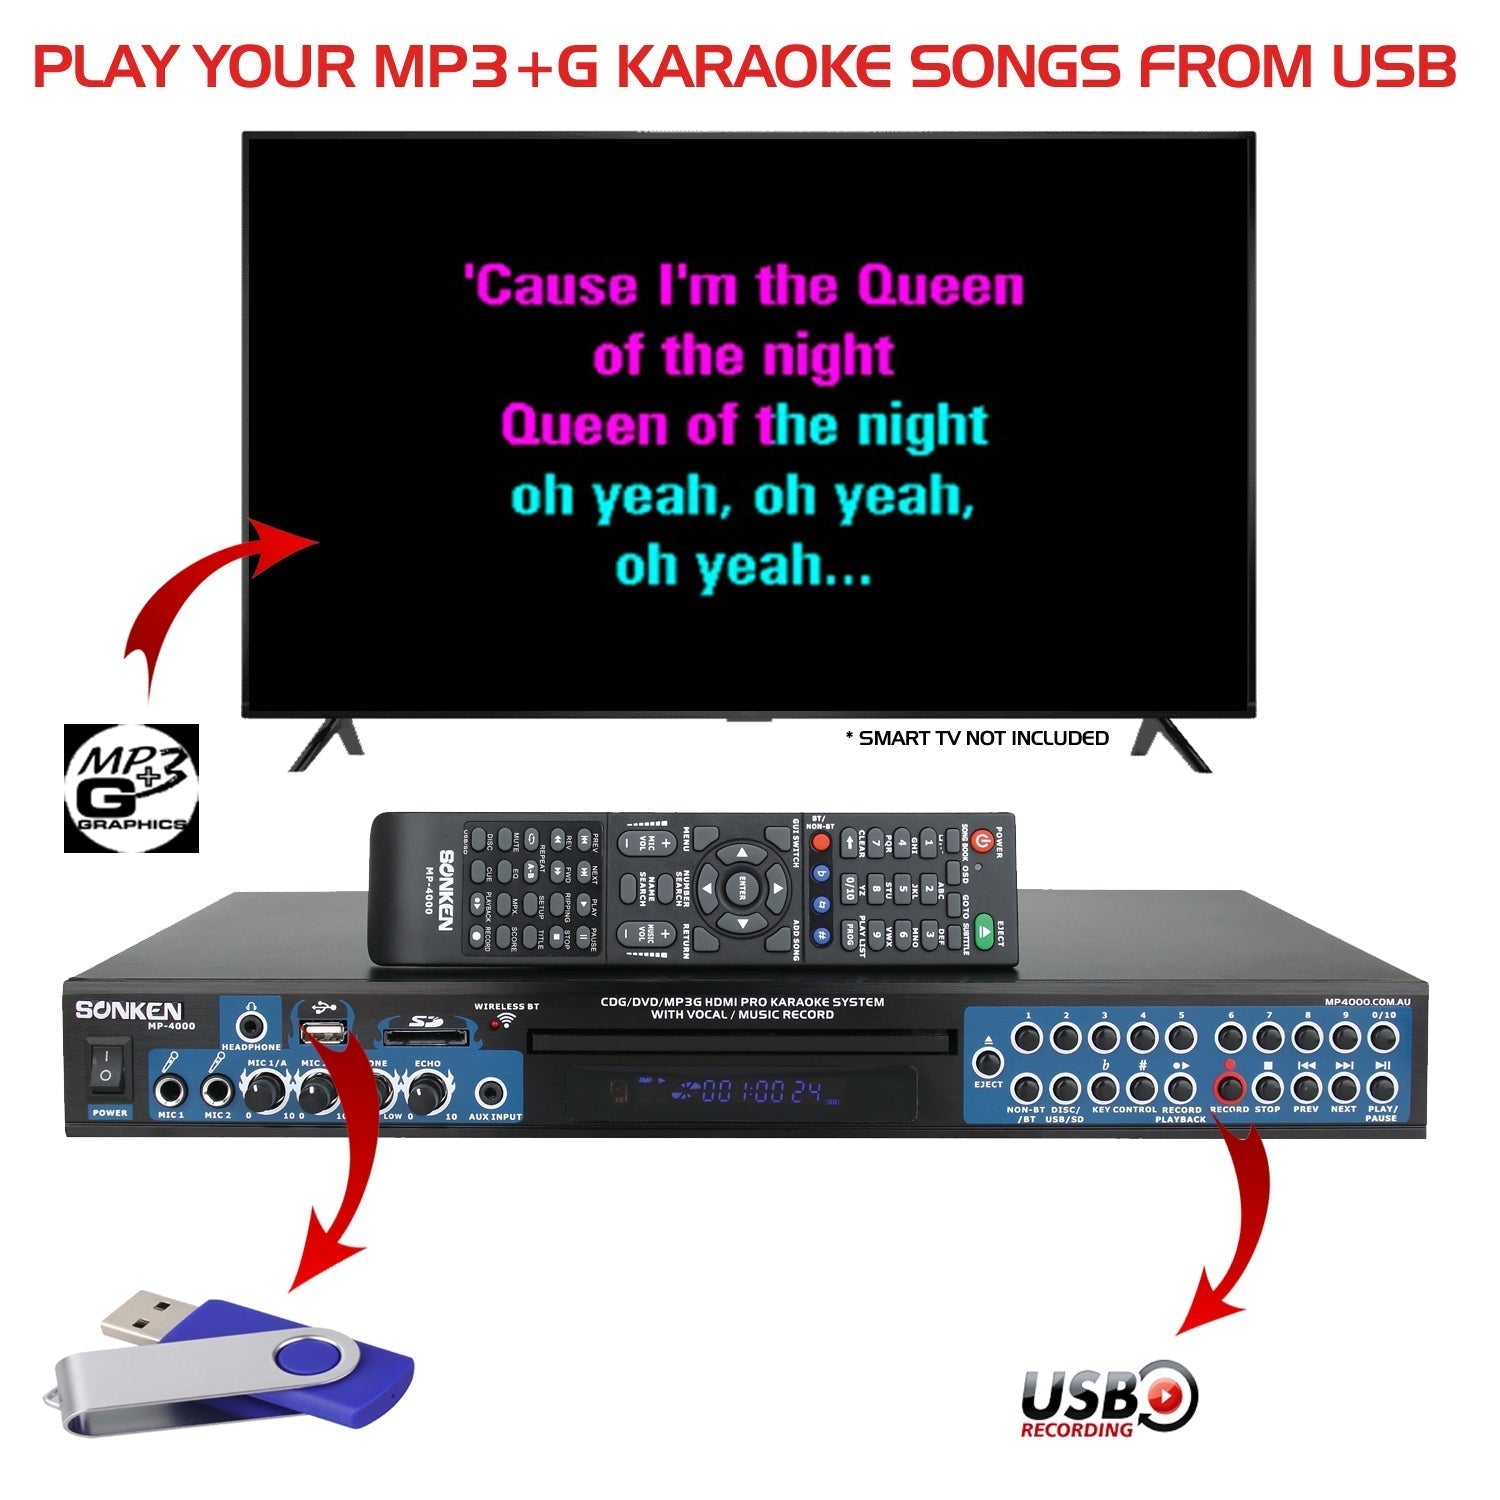 Sonken MP4000 Pro Karaoke Machine + 420 Songs from the 70's & 80's + 2 Wired Microphones - Karaoke Home Entertainment